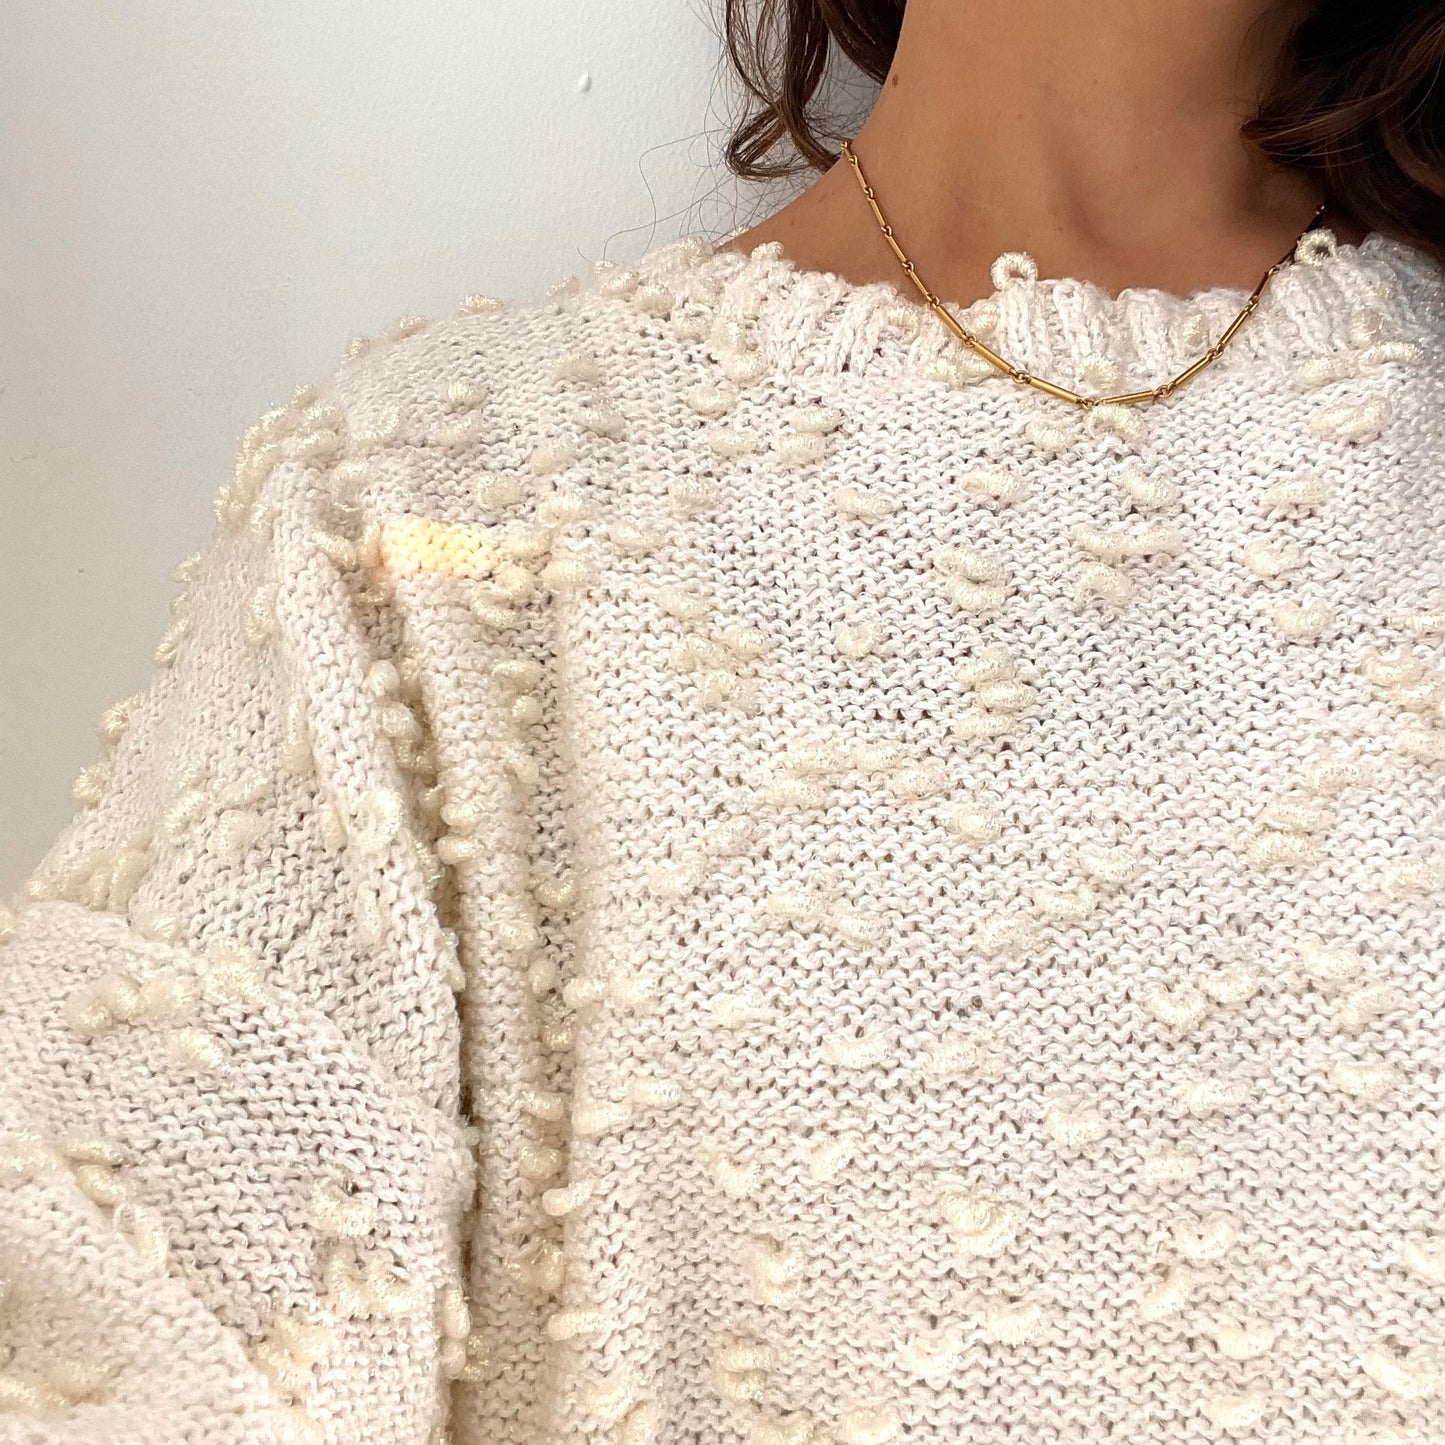 Iridescent Popcorn Textured Sweater